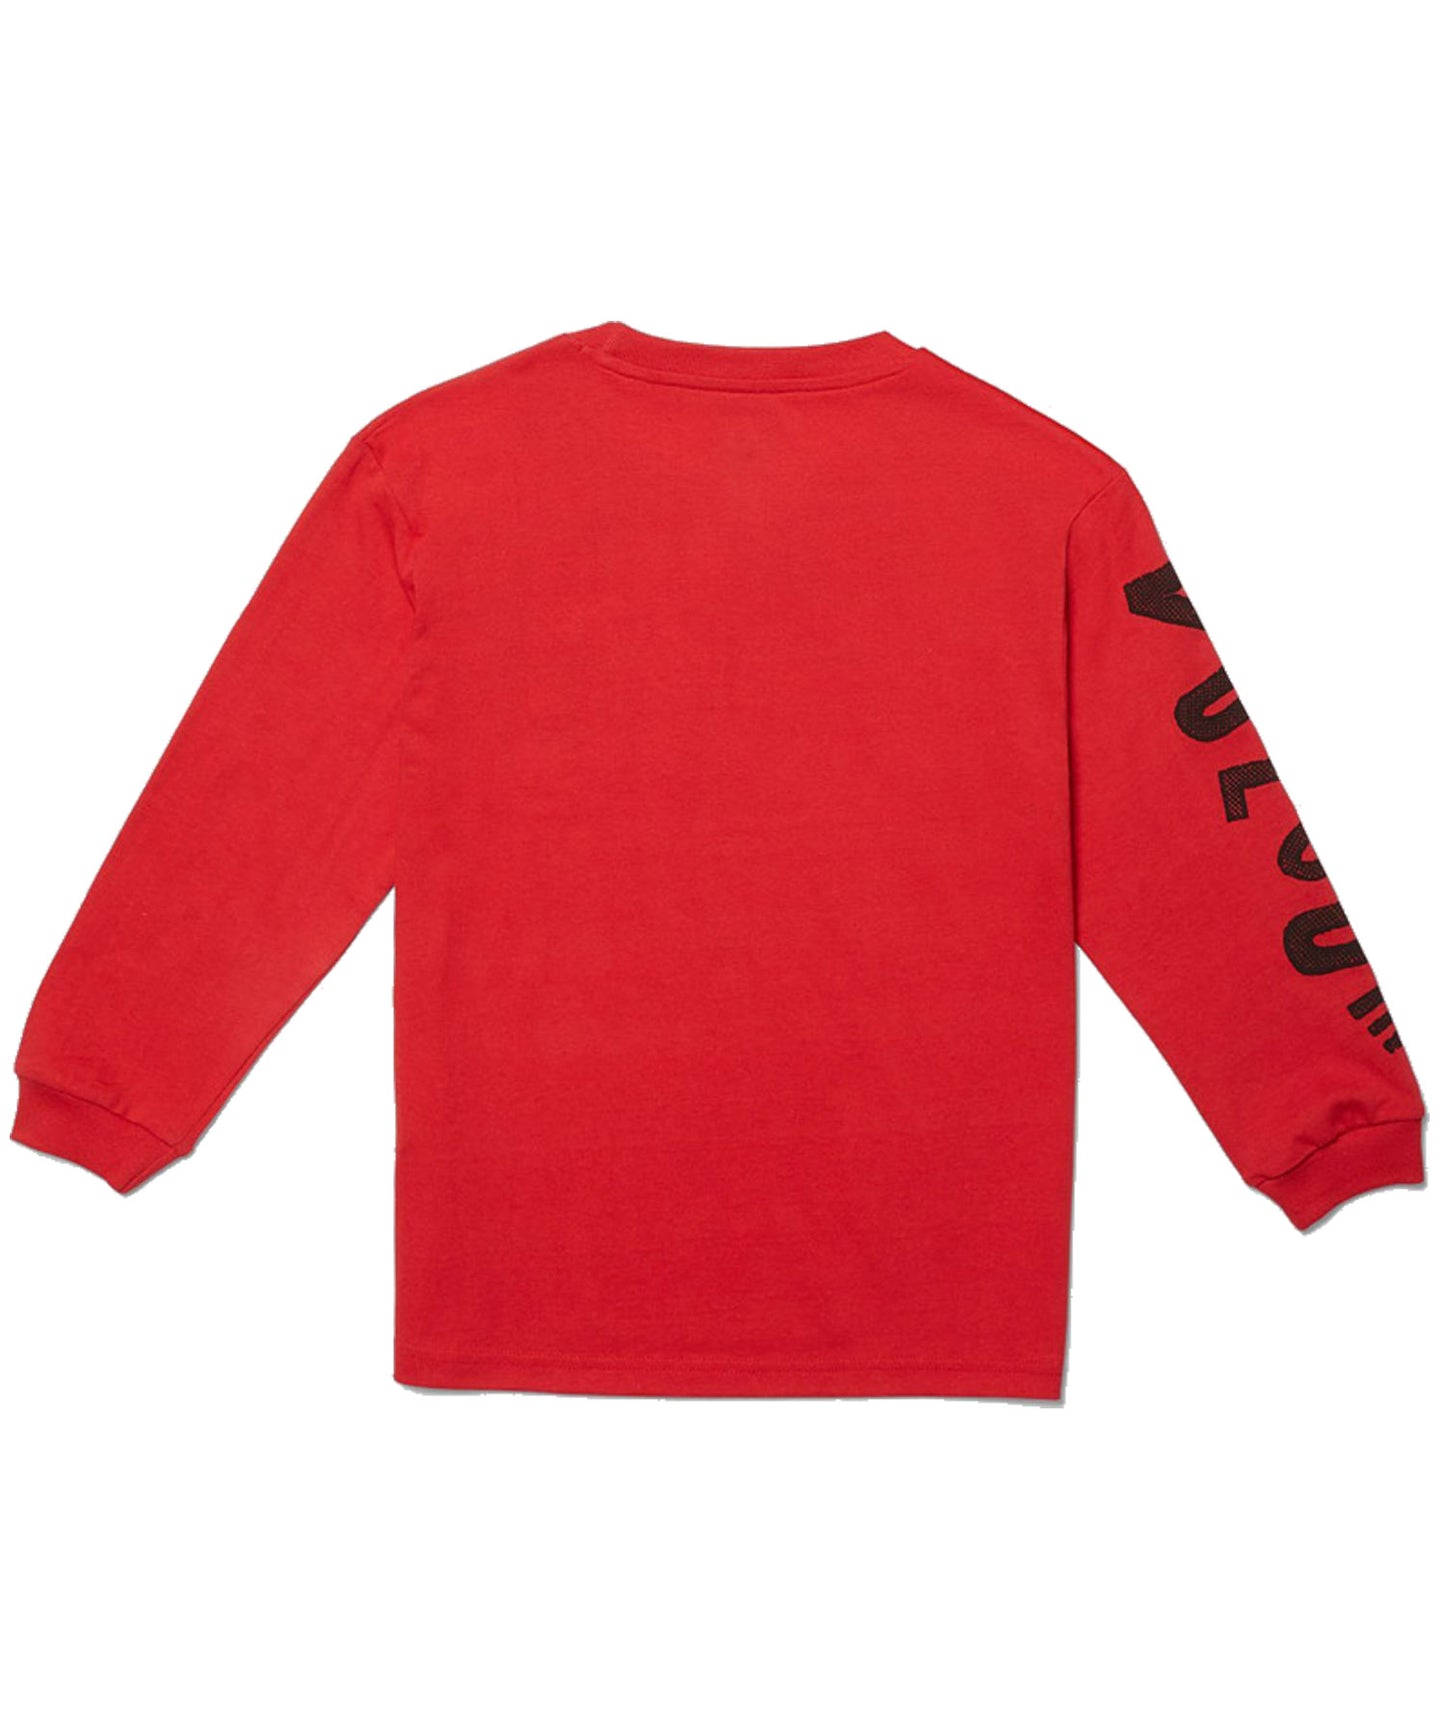 volcom-camiseta-sick-red-Camiseta de manga larga para niños-cuello redondo corte clásico-algodón orgánico-serigrafiado Triple Stone-100%algodón